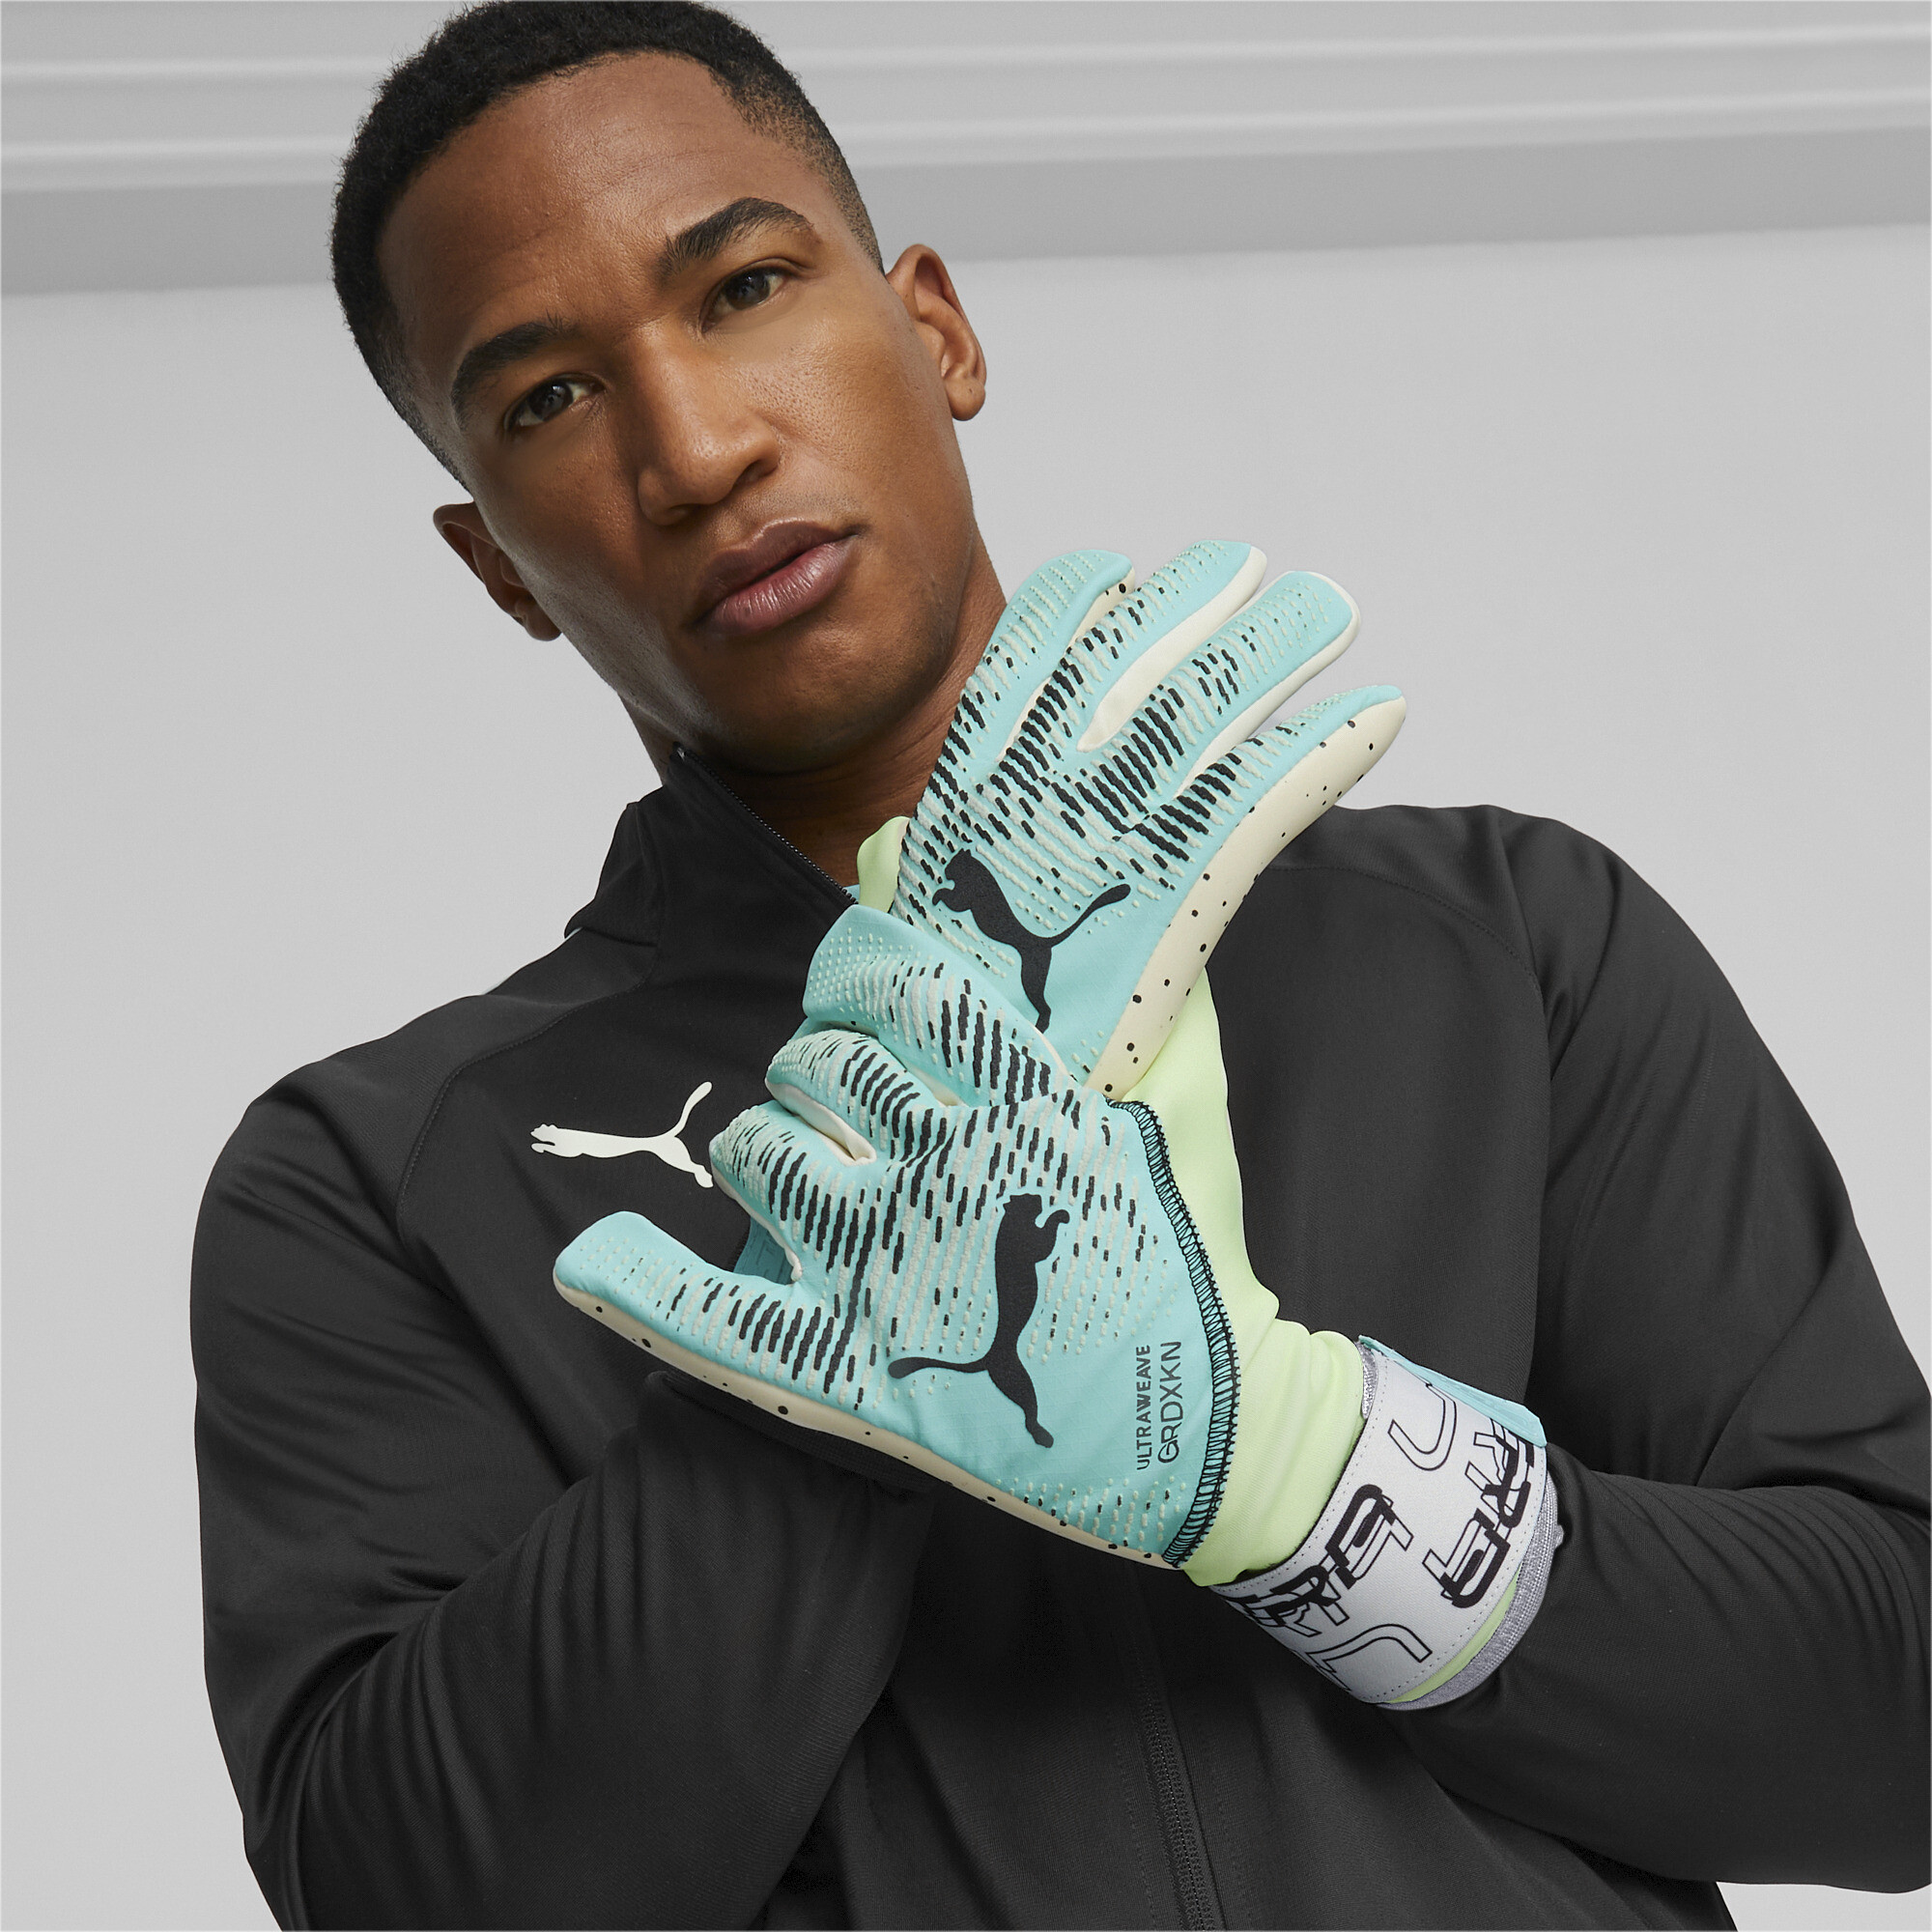 Puma ULTRA Ultimate 1 Negative Cut Football Goalkeeper's Gloves, Green, Size 7, Accessories